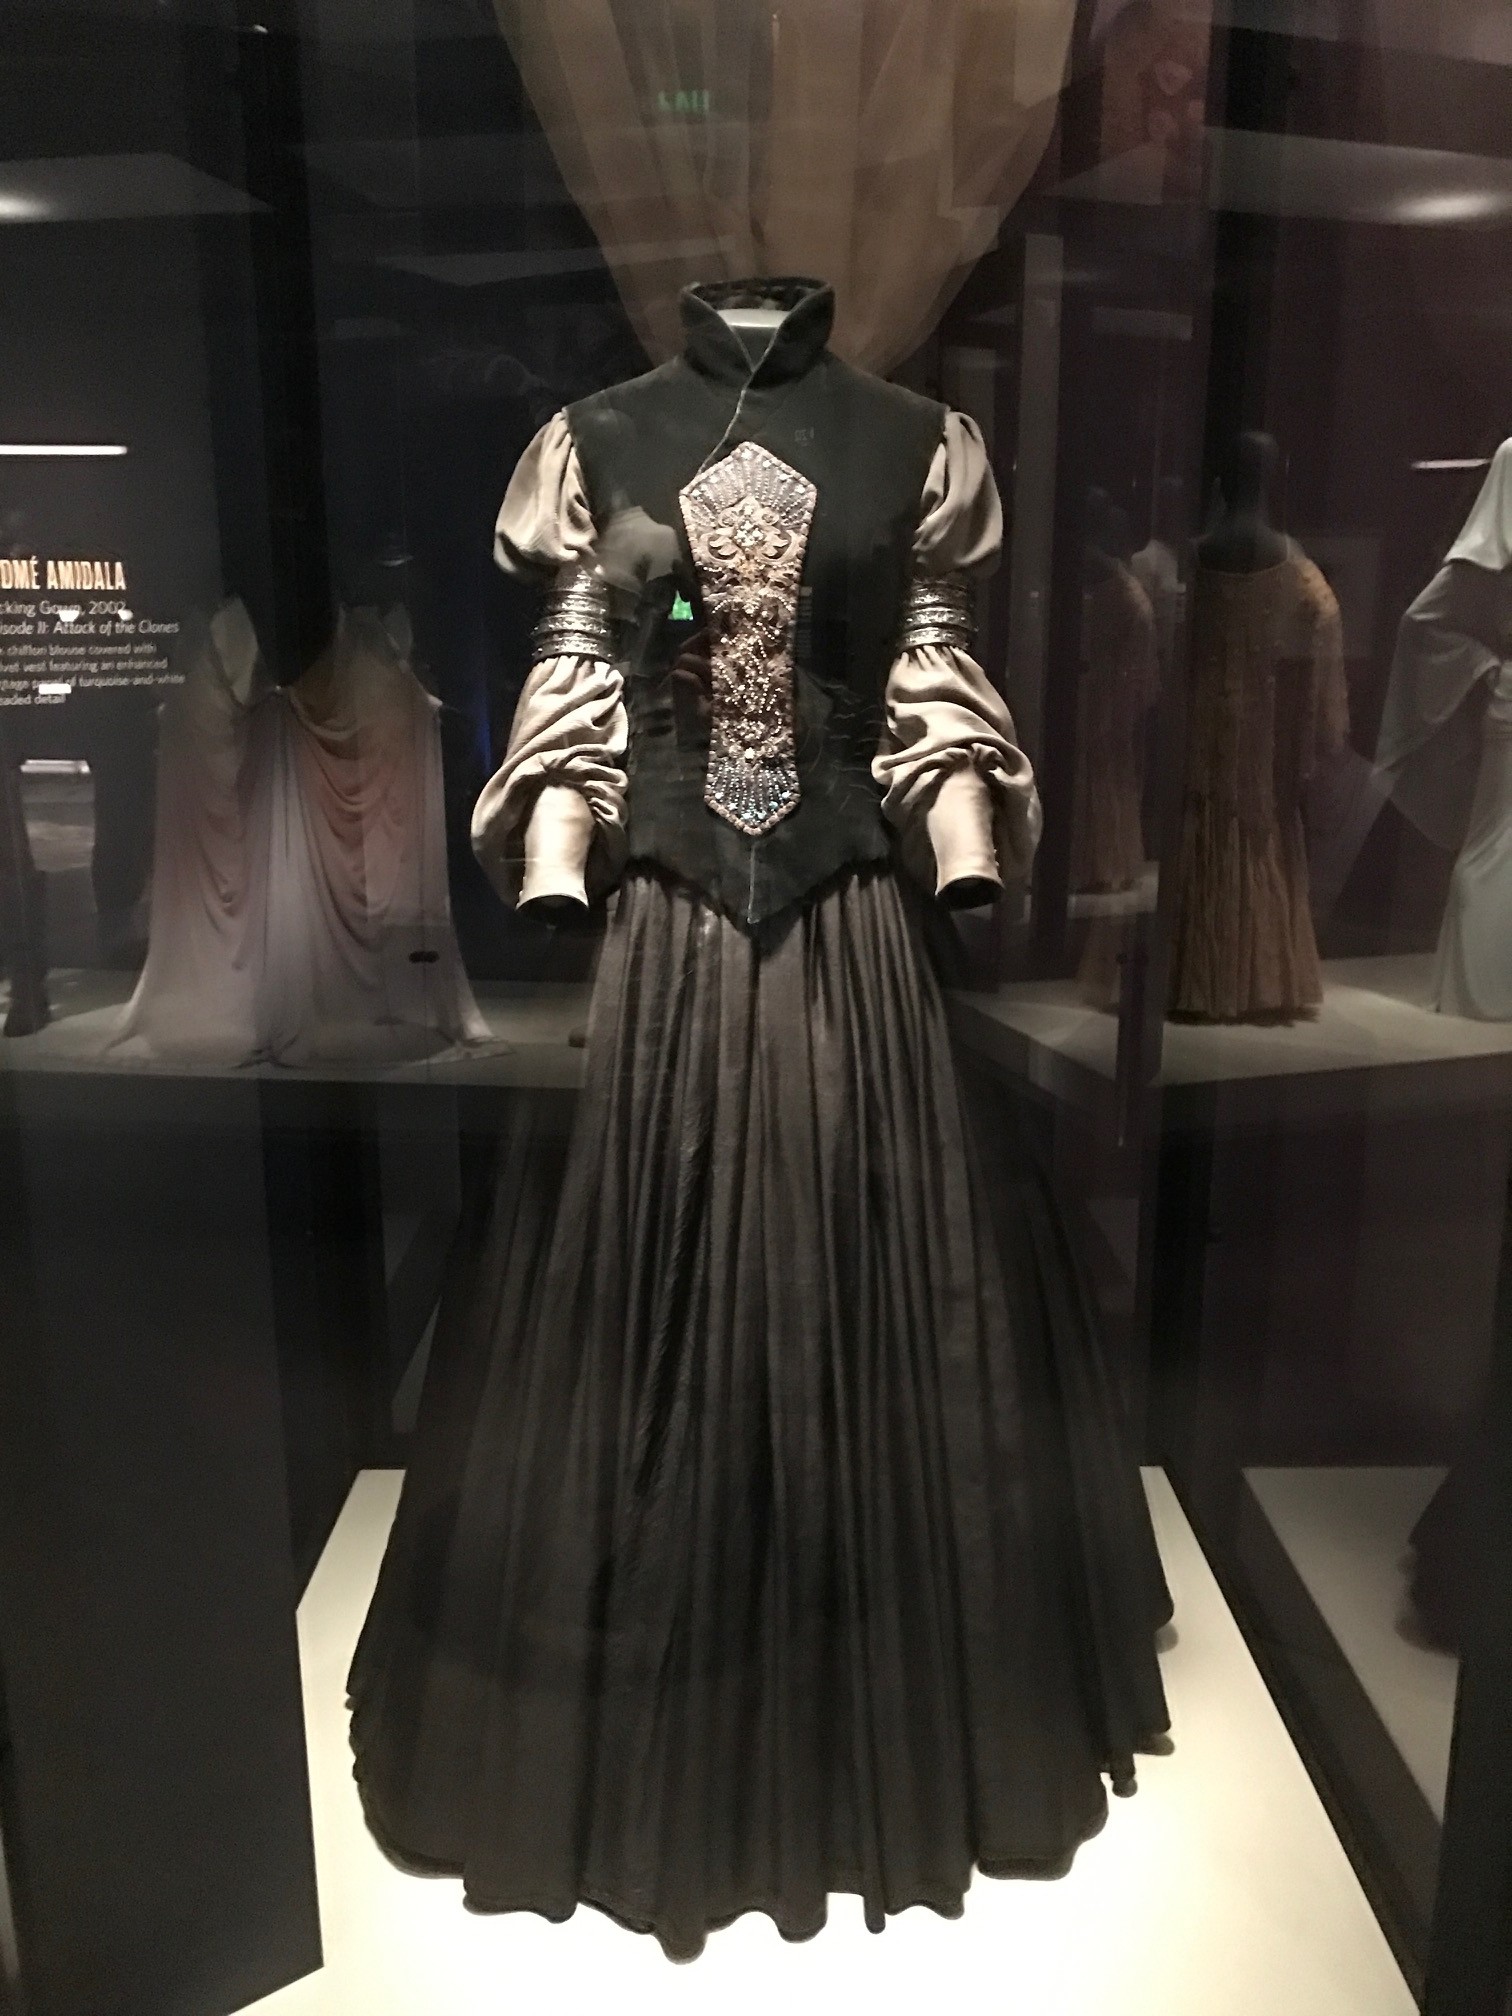 Star Wars Costume Spotlight: Padme Amadala's Dresses